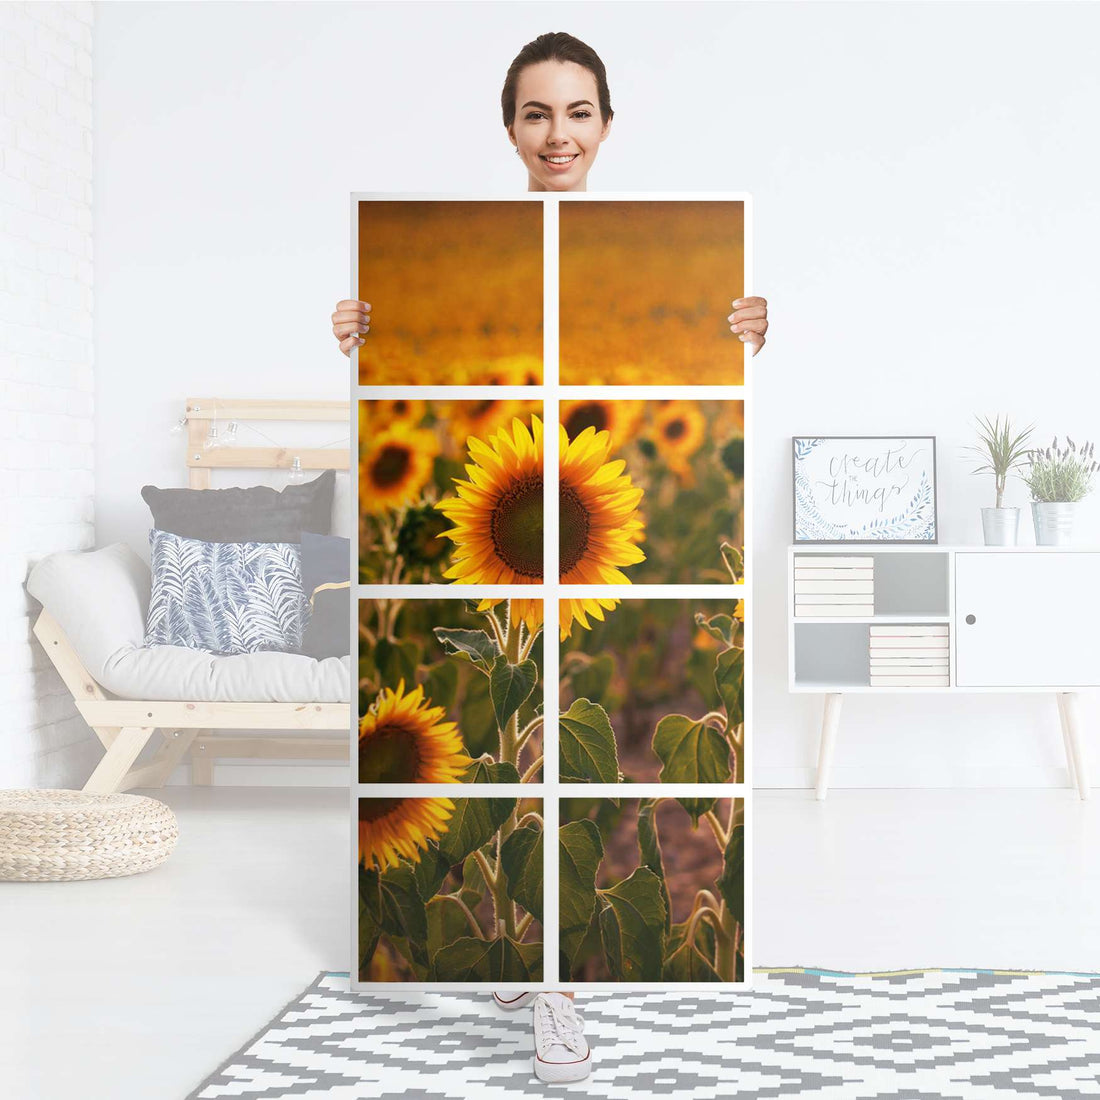 Folie für Möbel Sunflowers - IKEA Kallax Regal 8 Türen - Folie